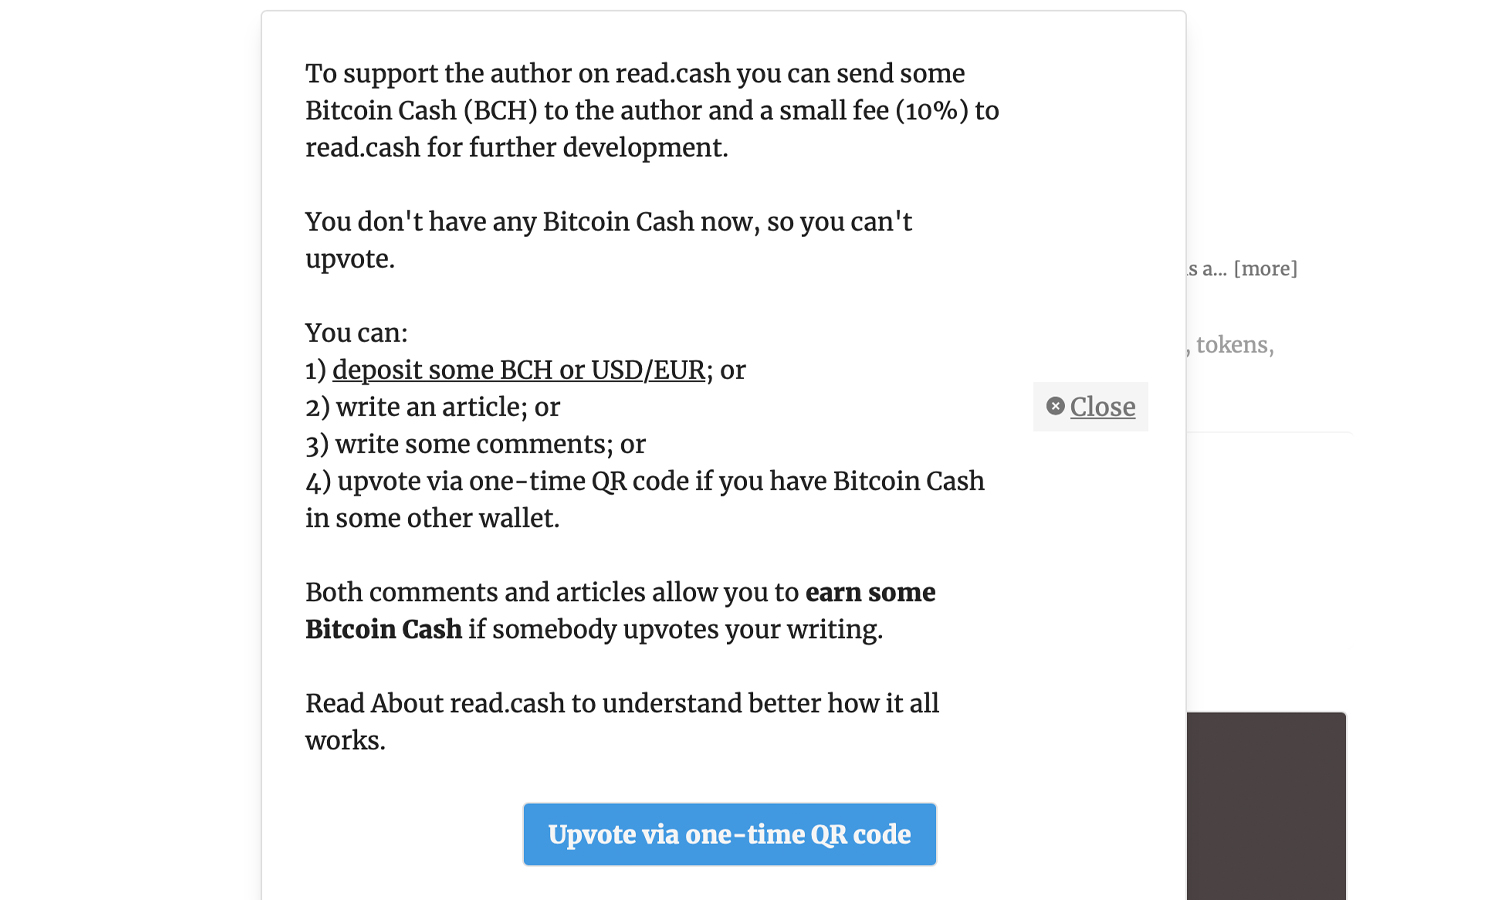 Read.cash Platform Rewards Content Creators With Bitcoin Cash Incentives